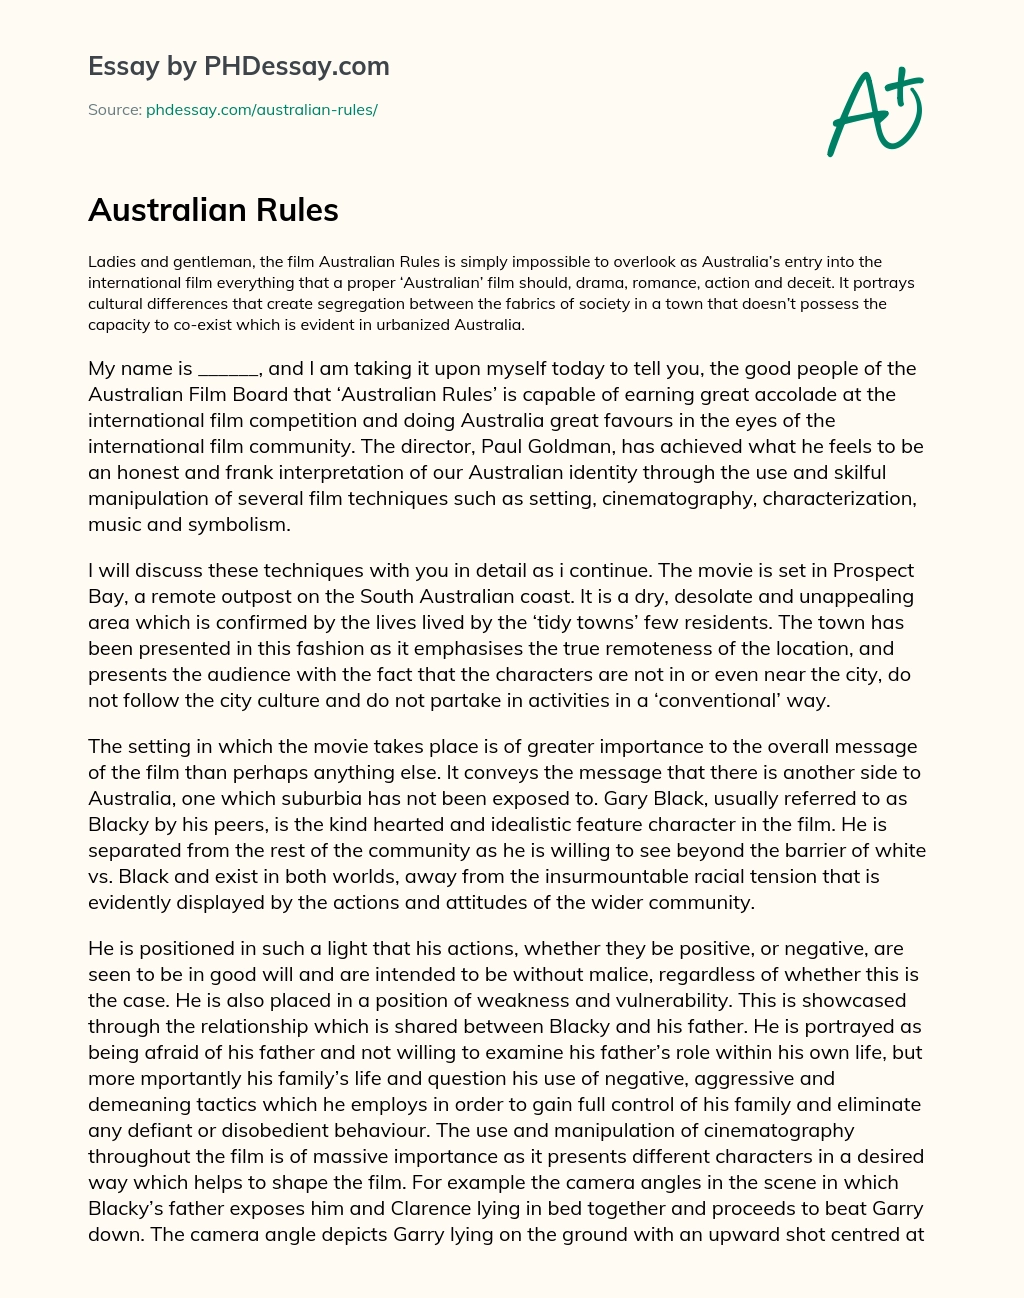 Australian Rules essay